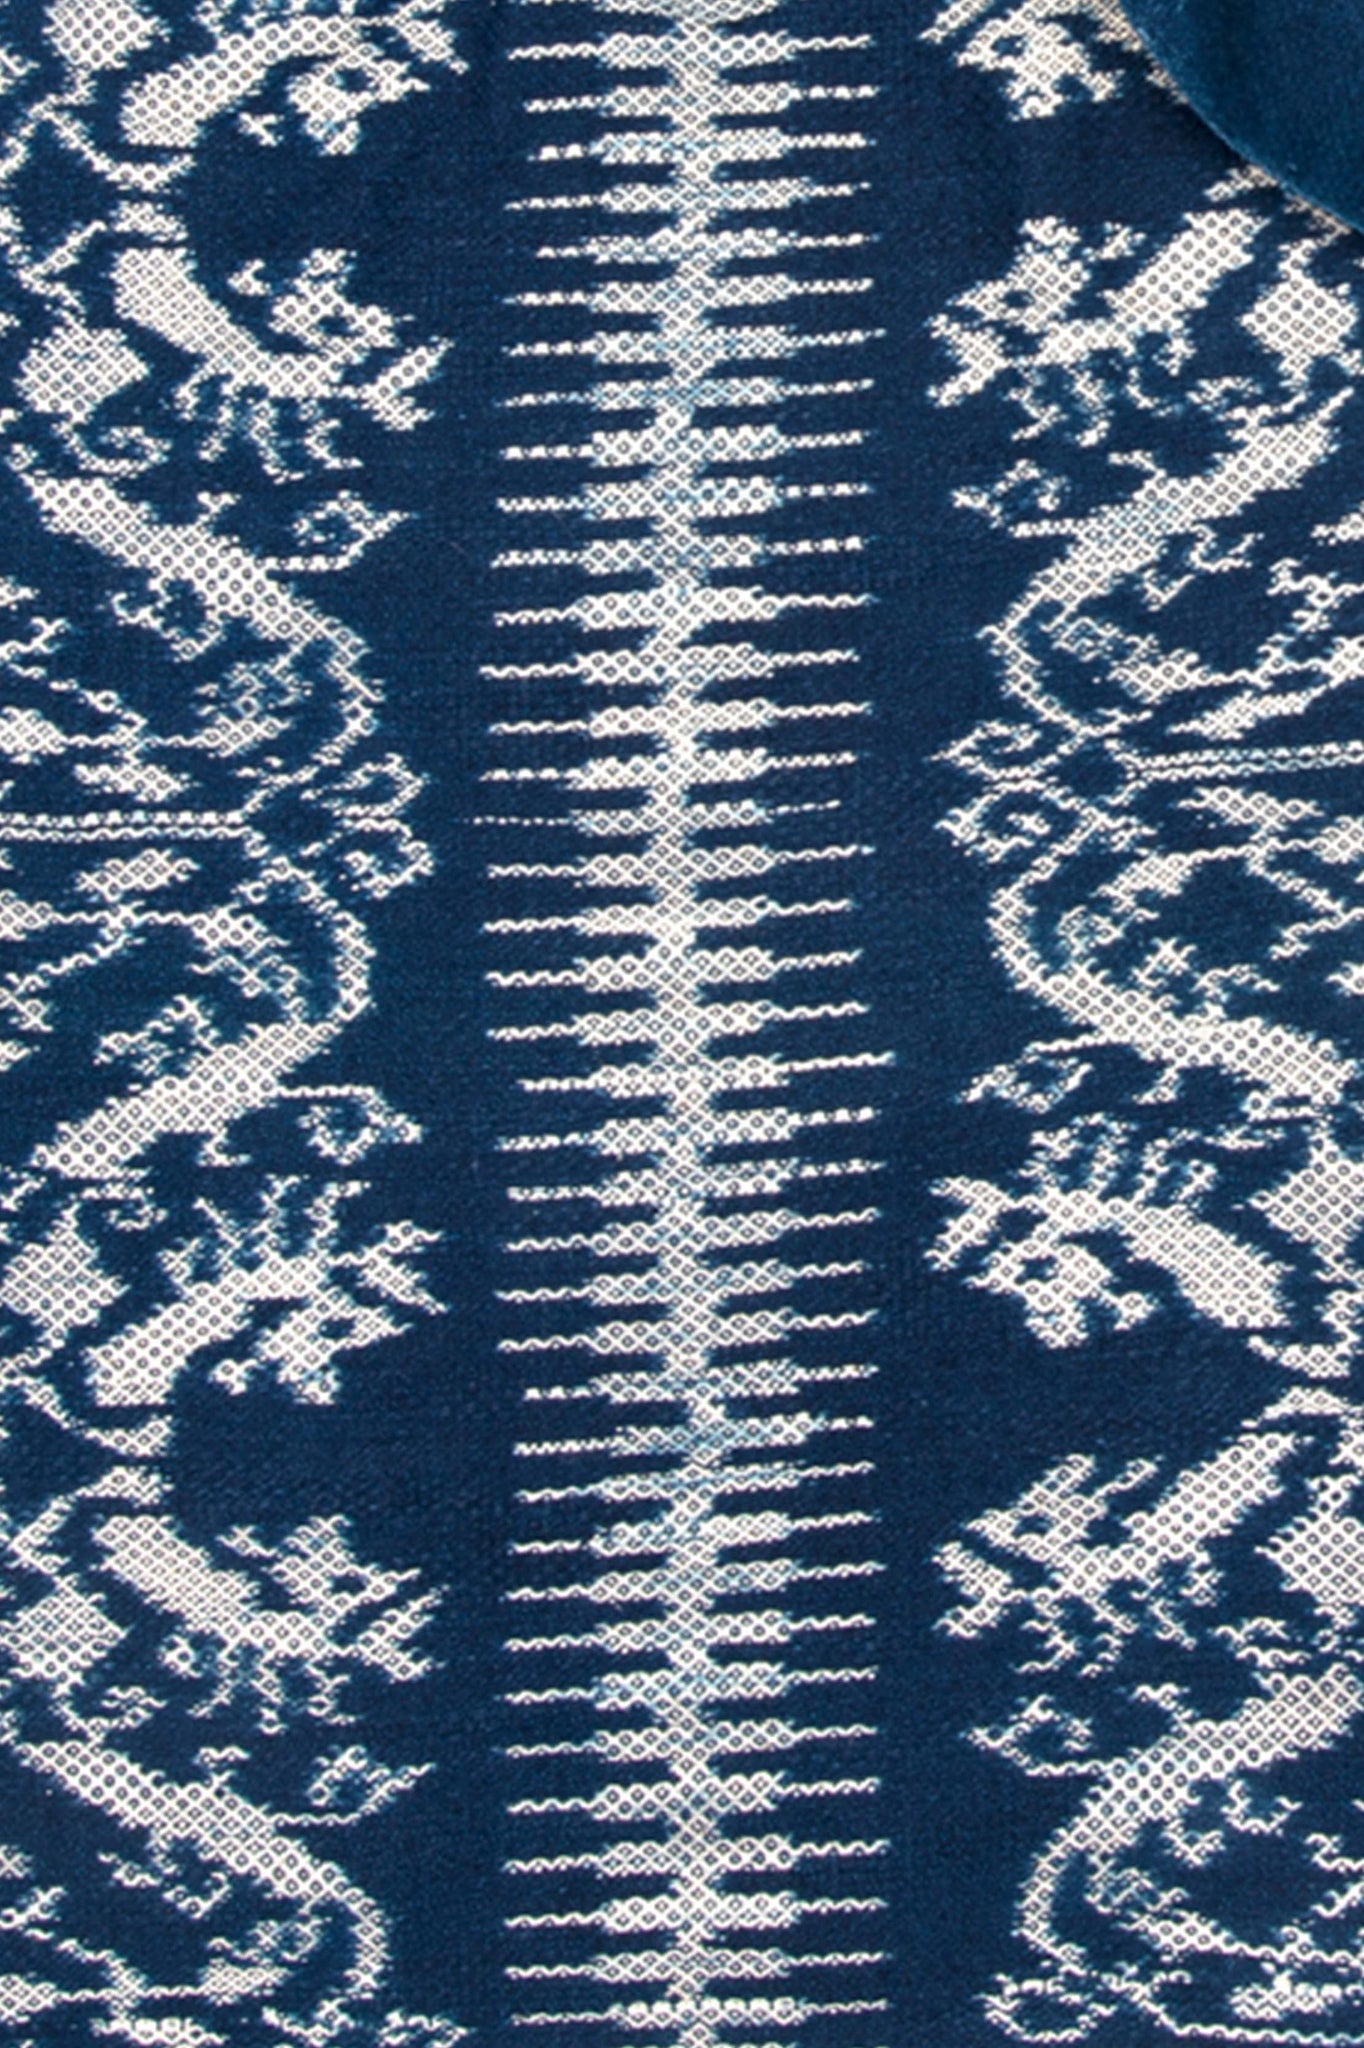 Seahorse Scarf - Ikat Weave